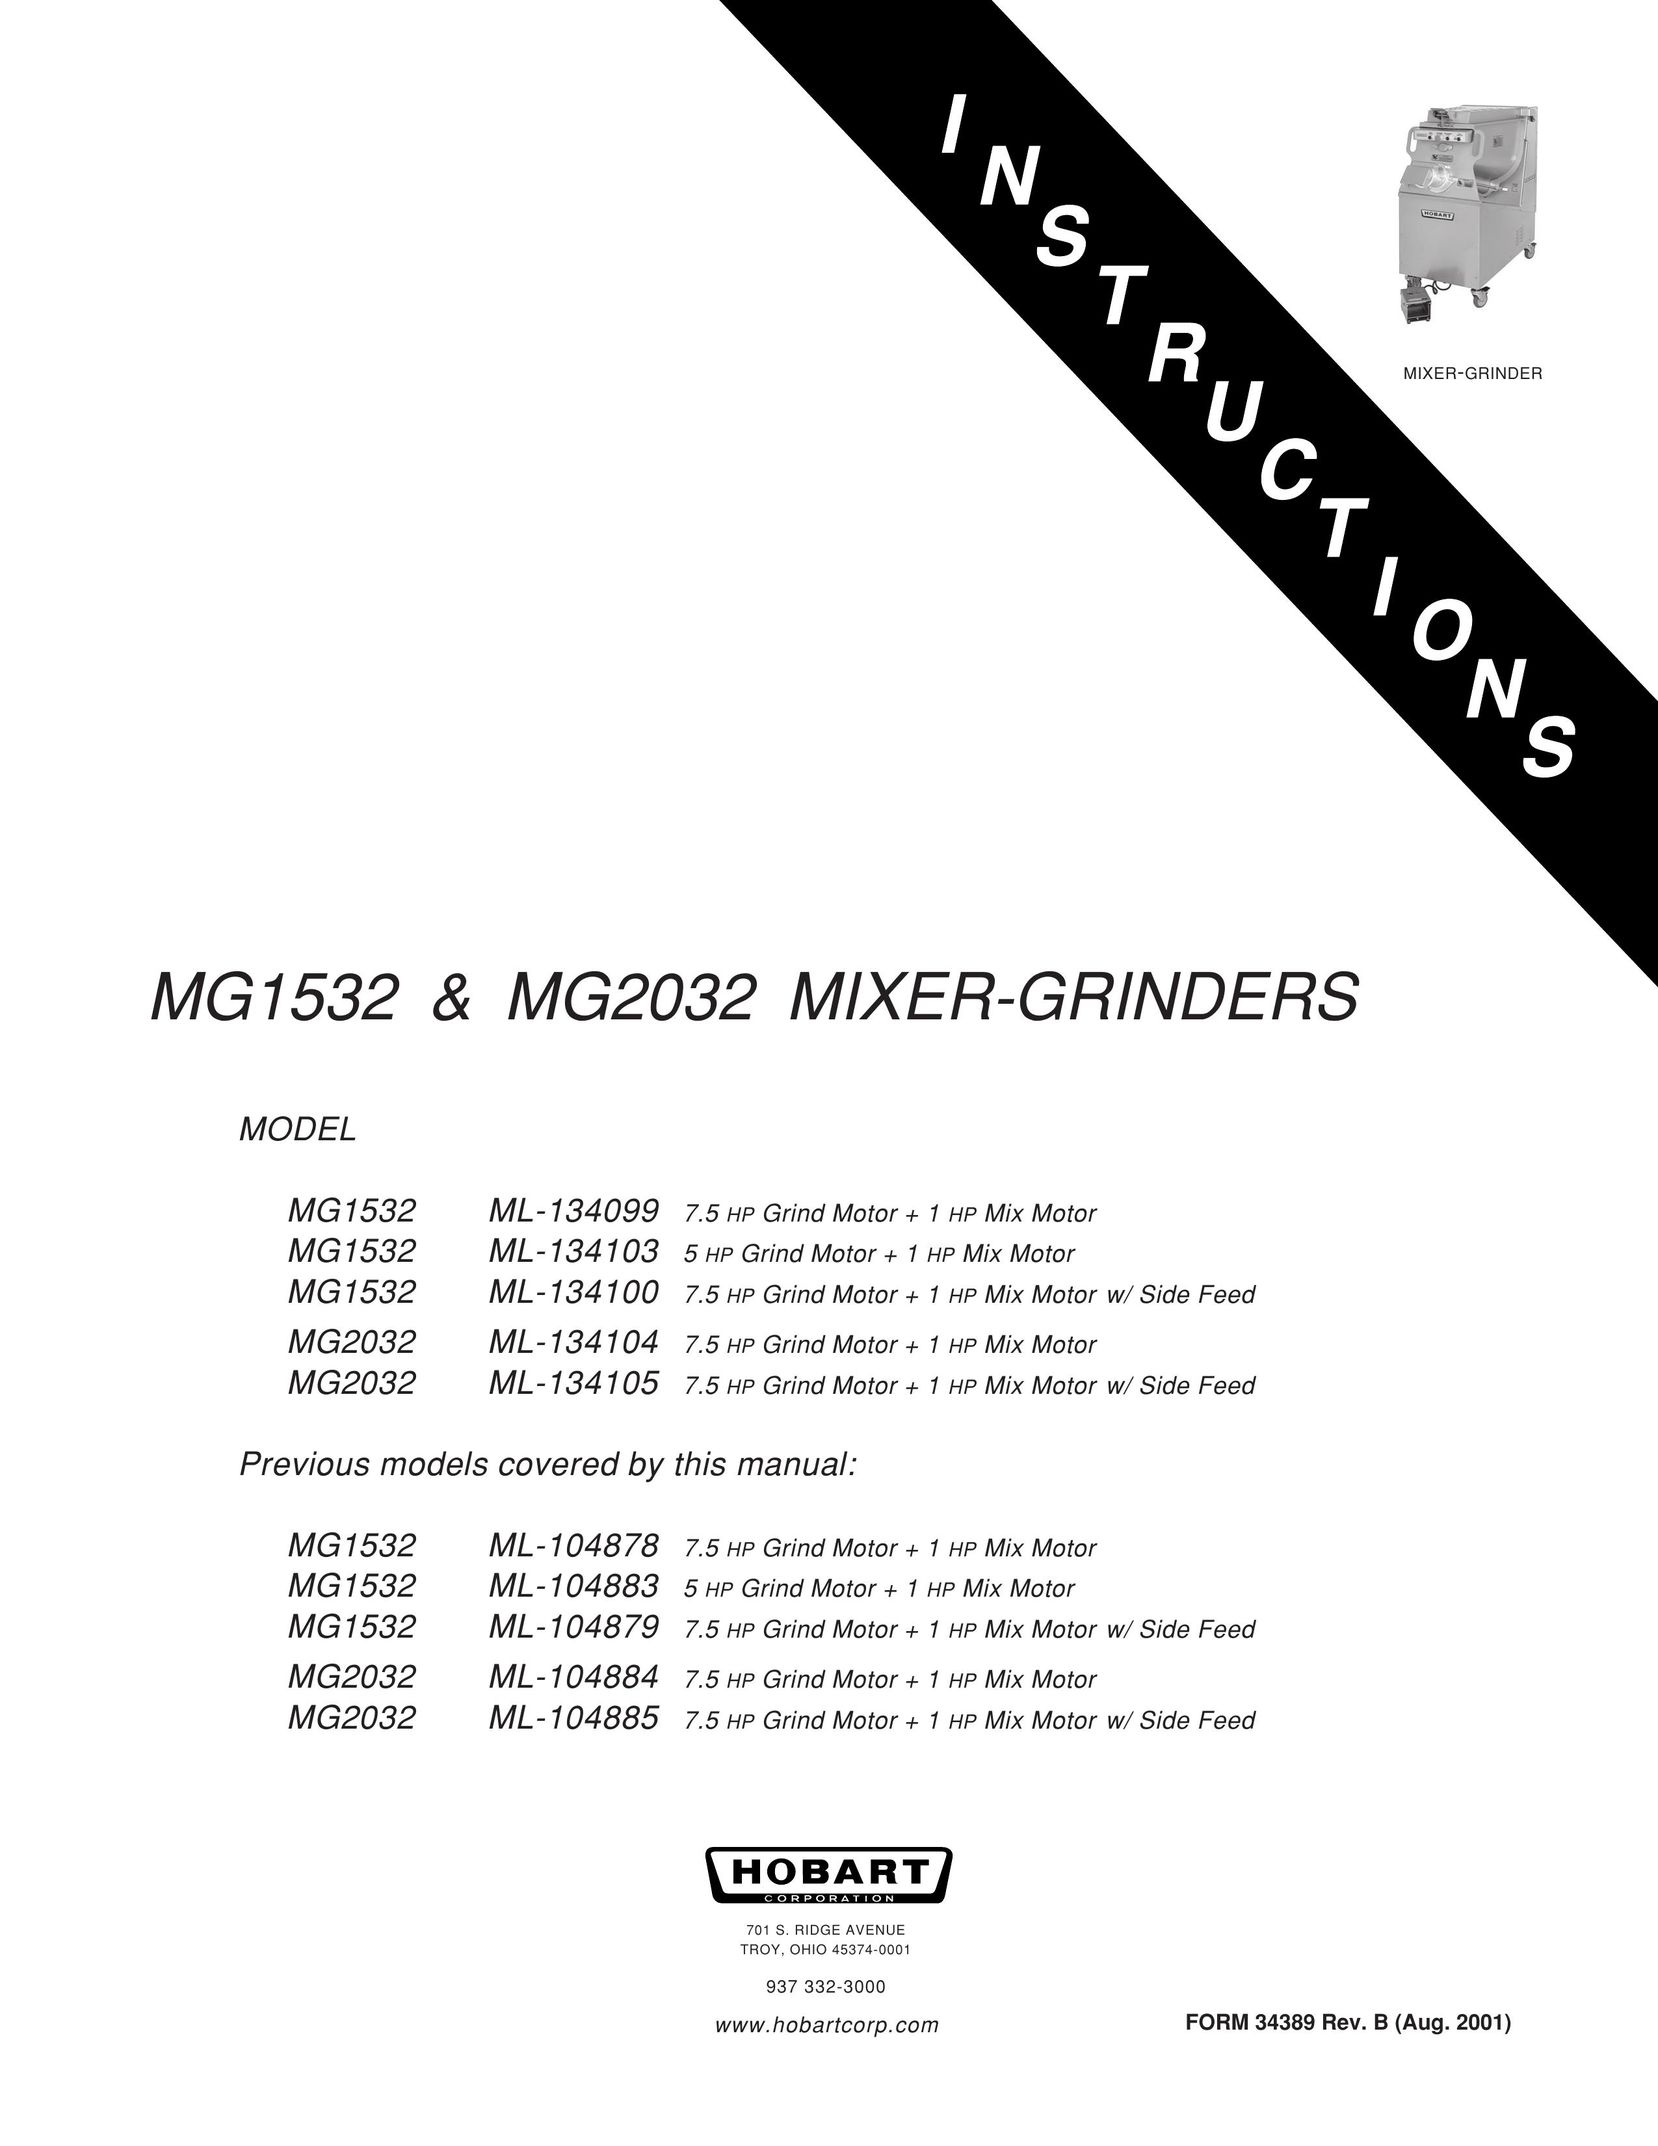 Hobart MG1532 Blender User Manual